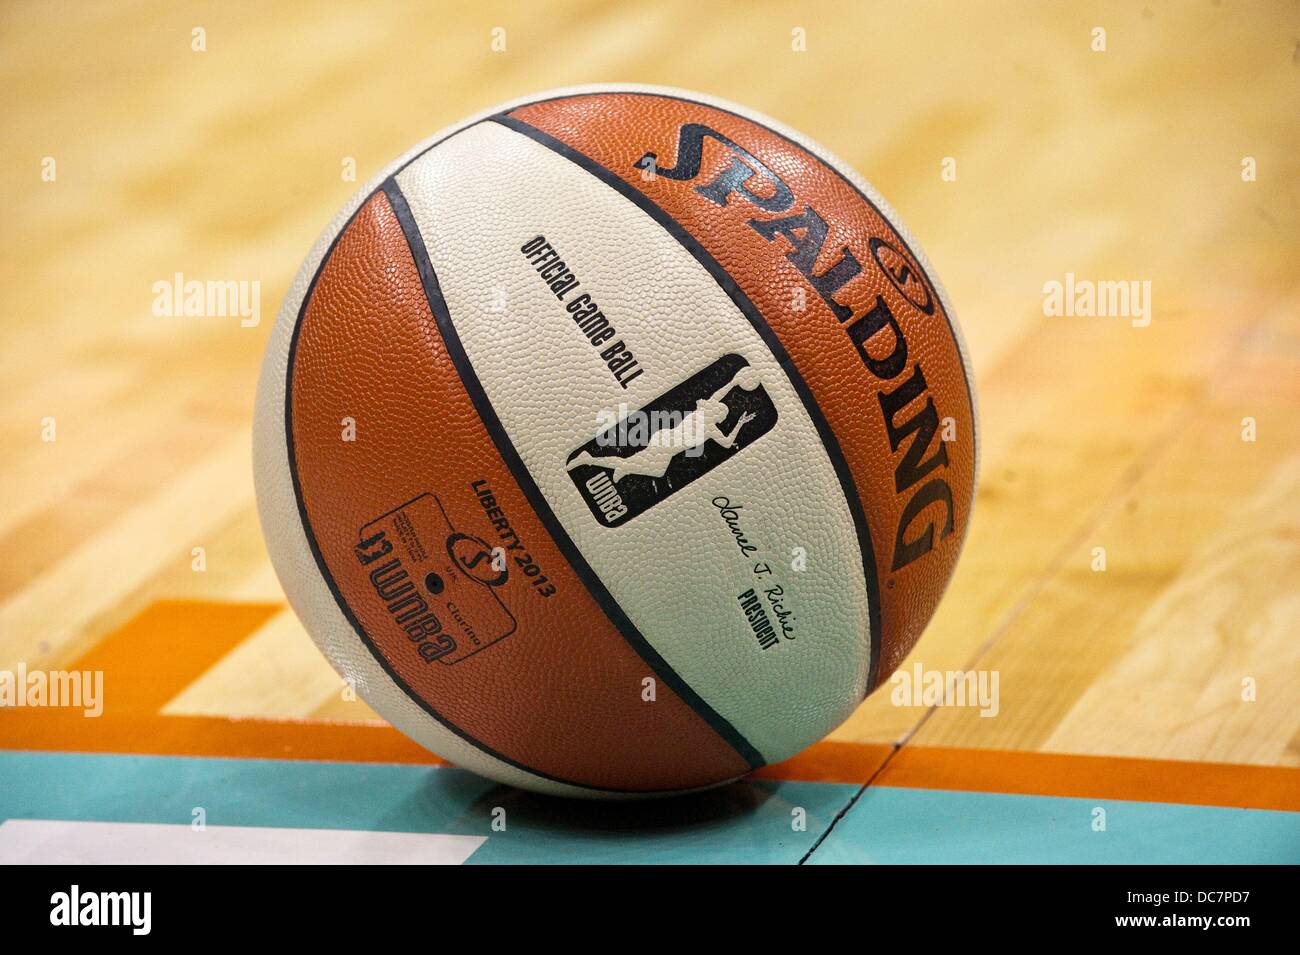 Balón baloncesto spalding NBA - Deportes Regol